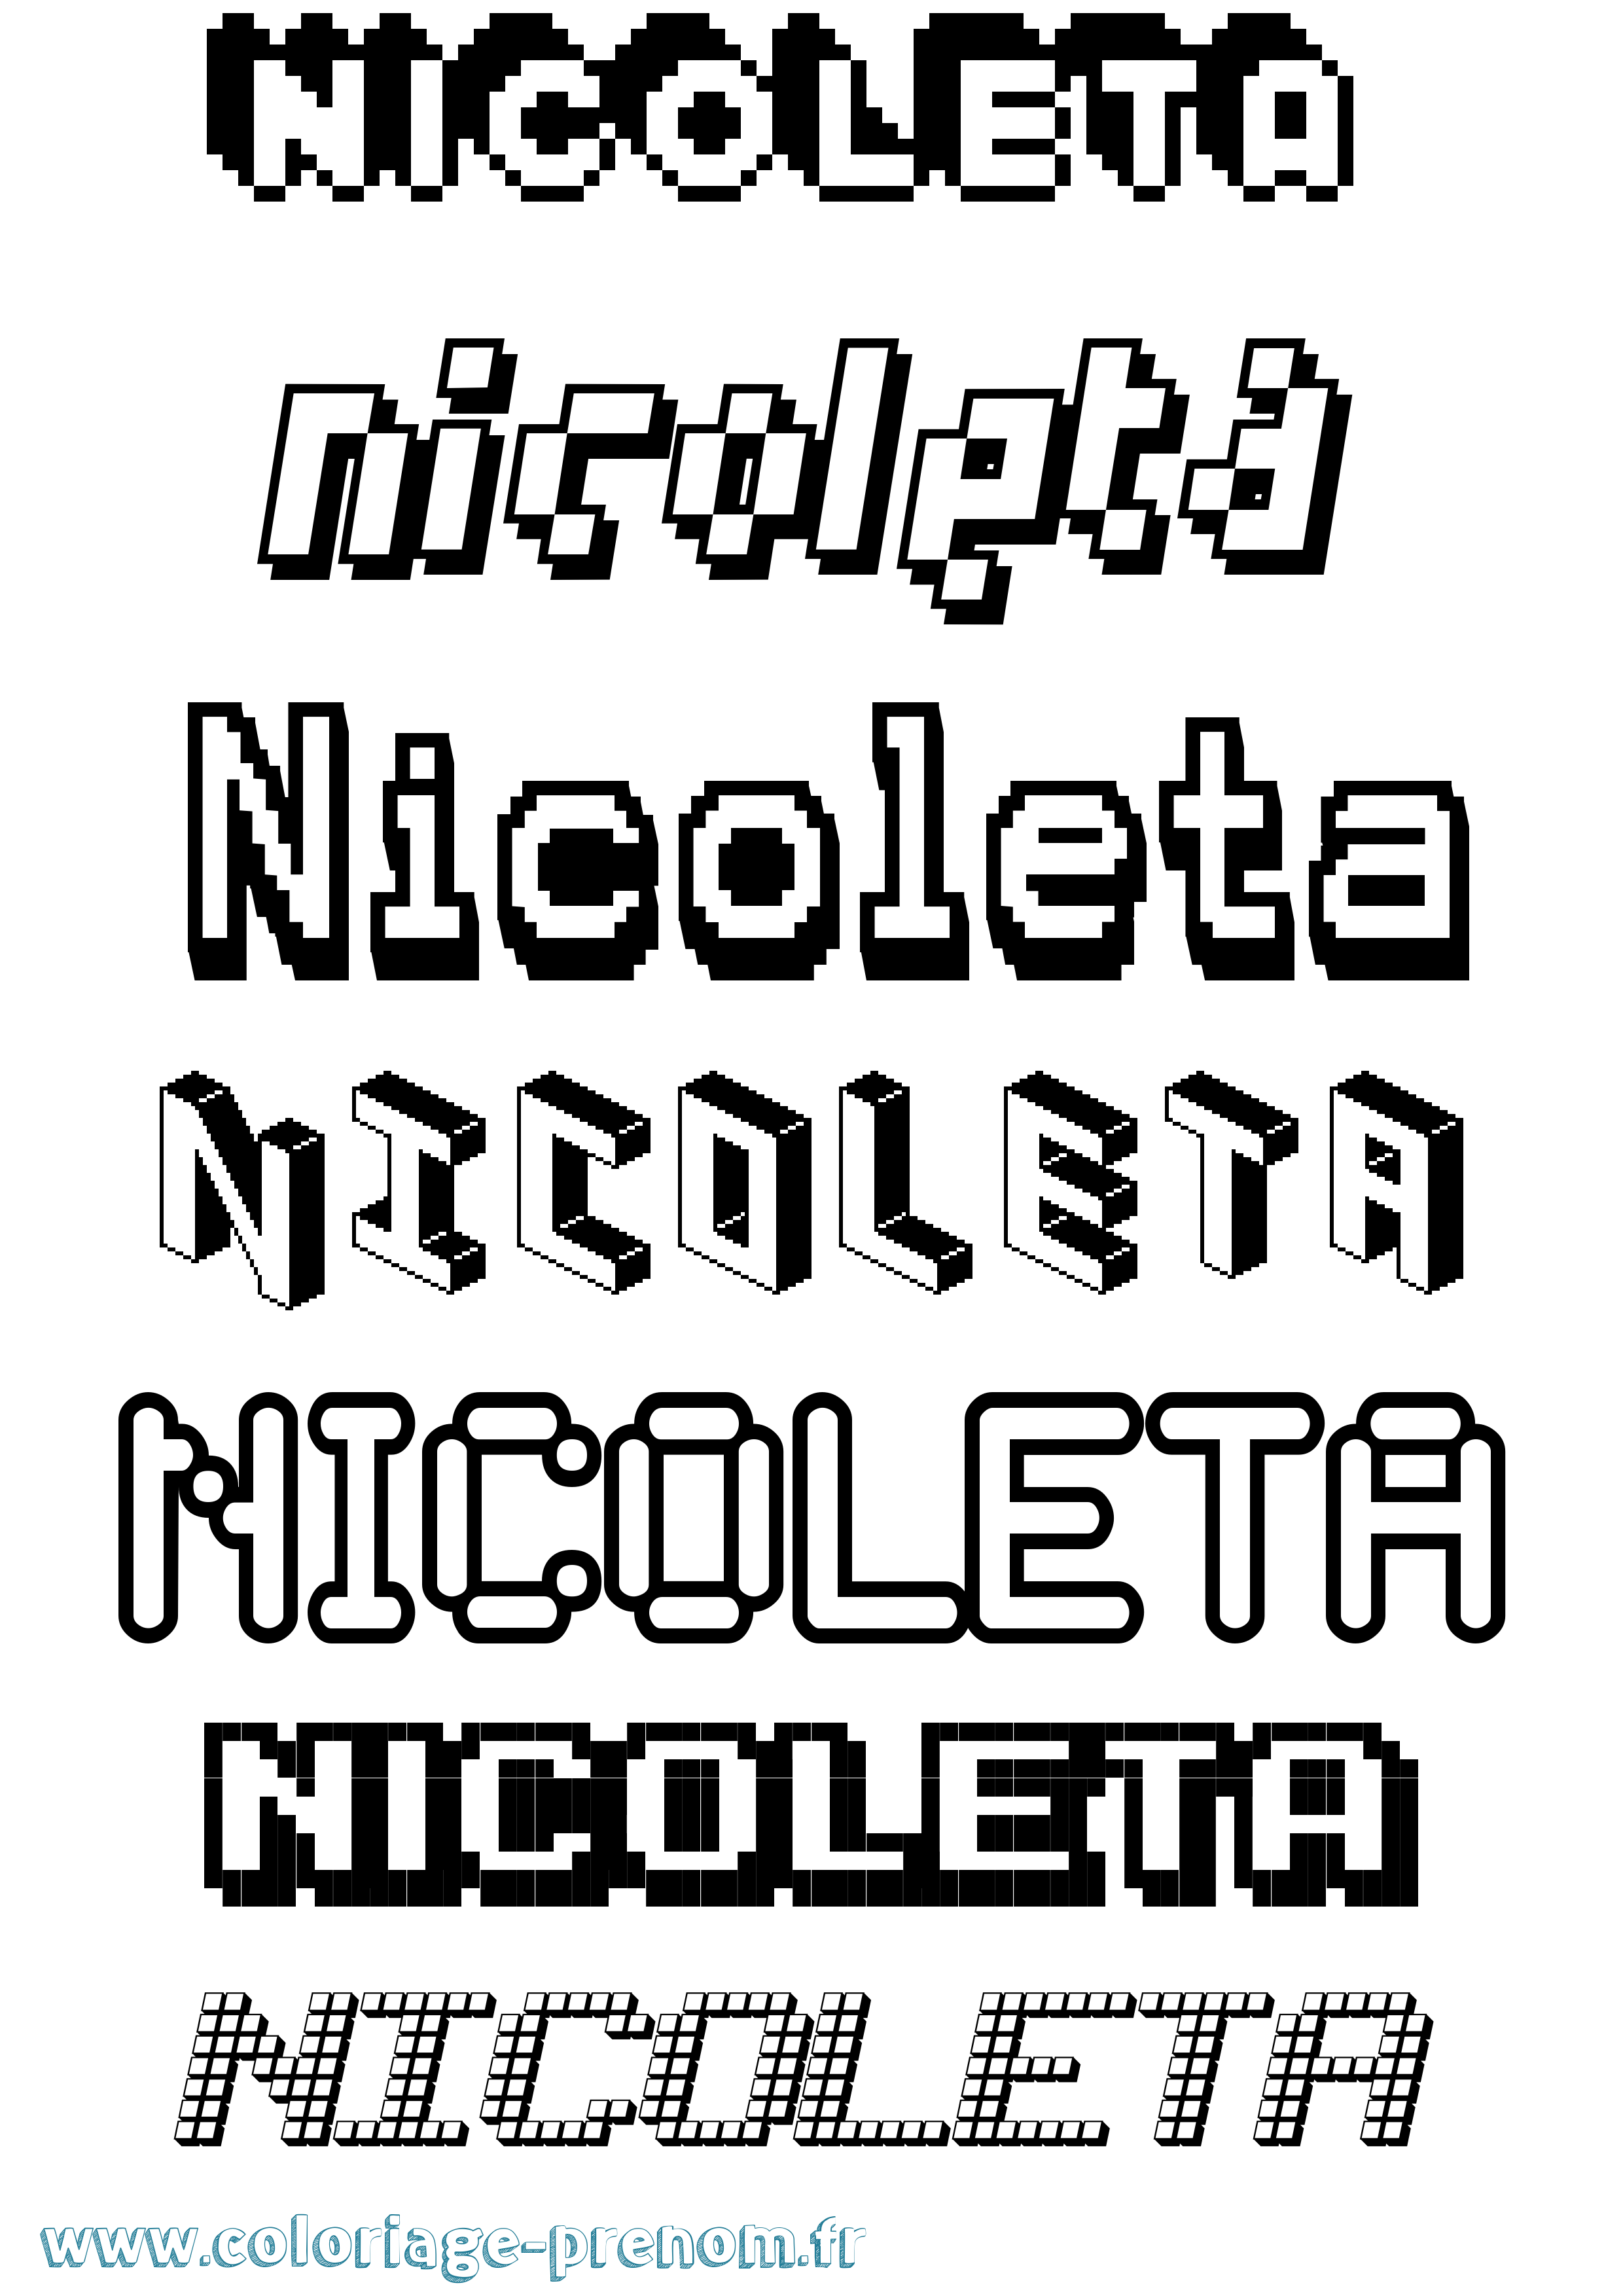 Coloriage prénom Nicoleta Pixel